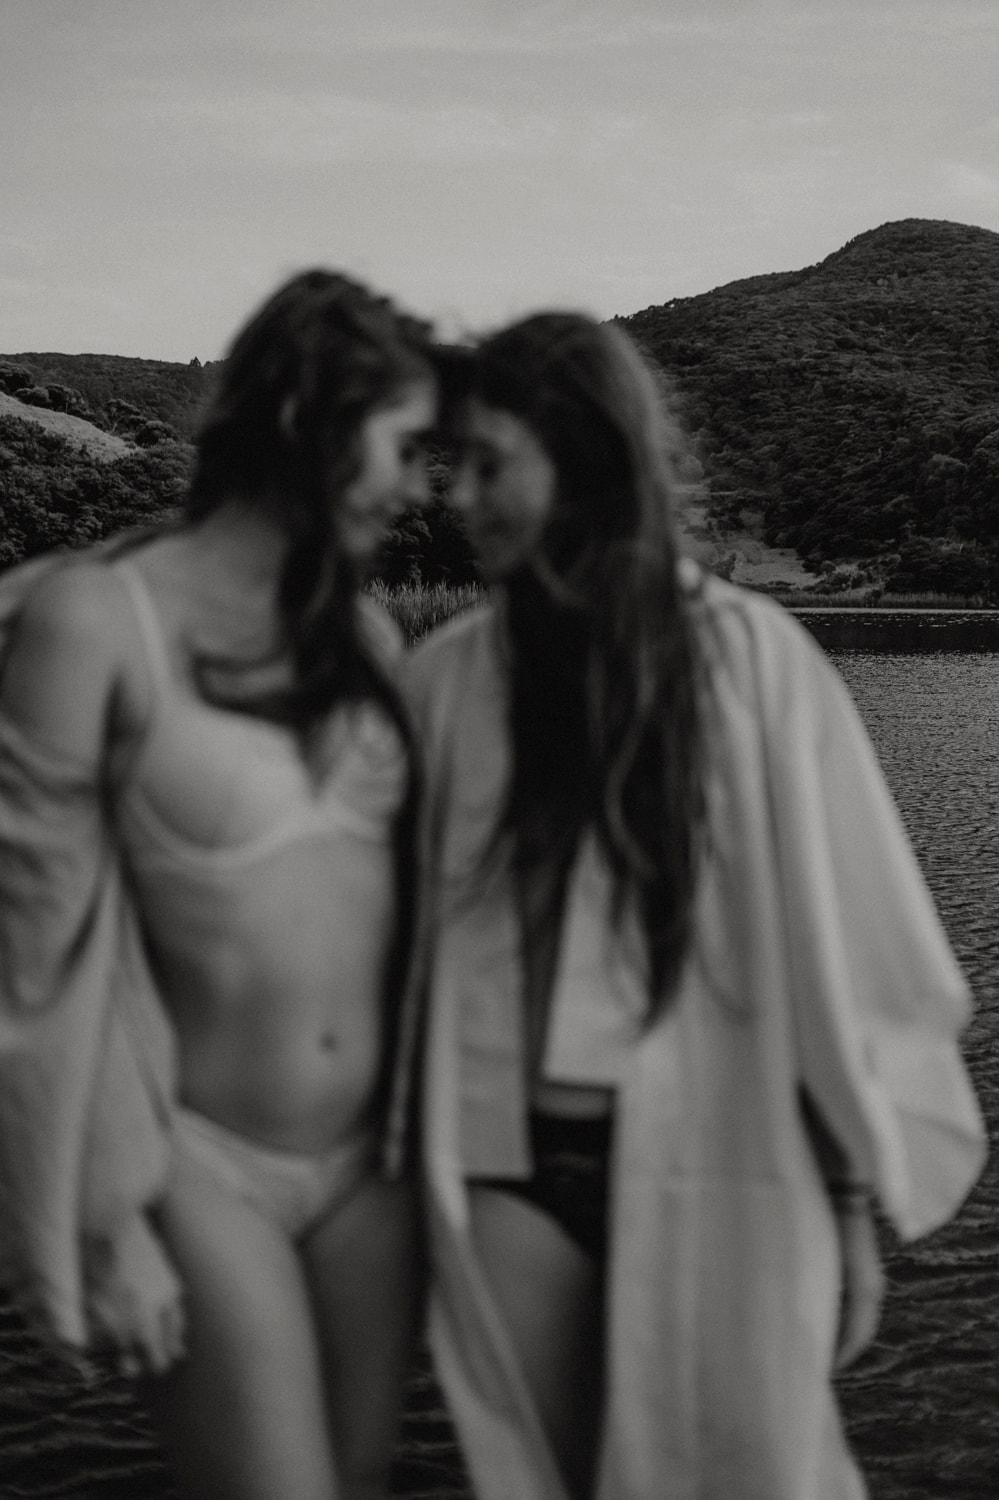 Auckland couples, boudoir and empowerment portrait photographer. Book your shoot now. 